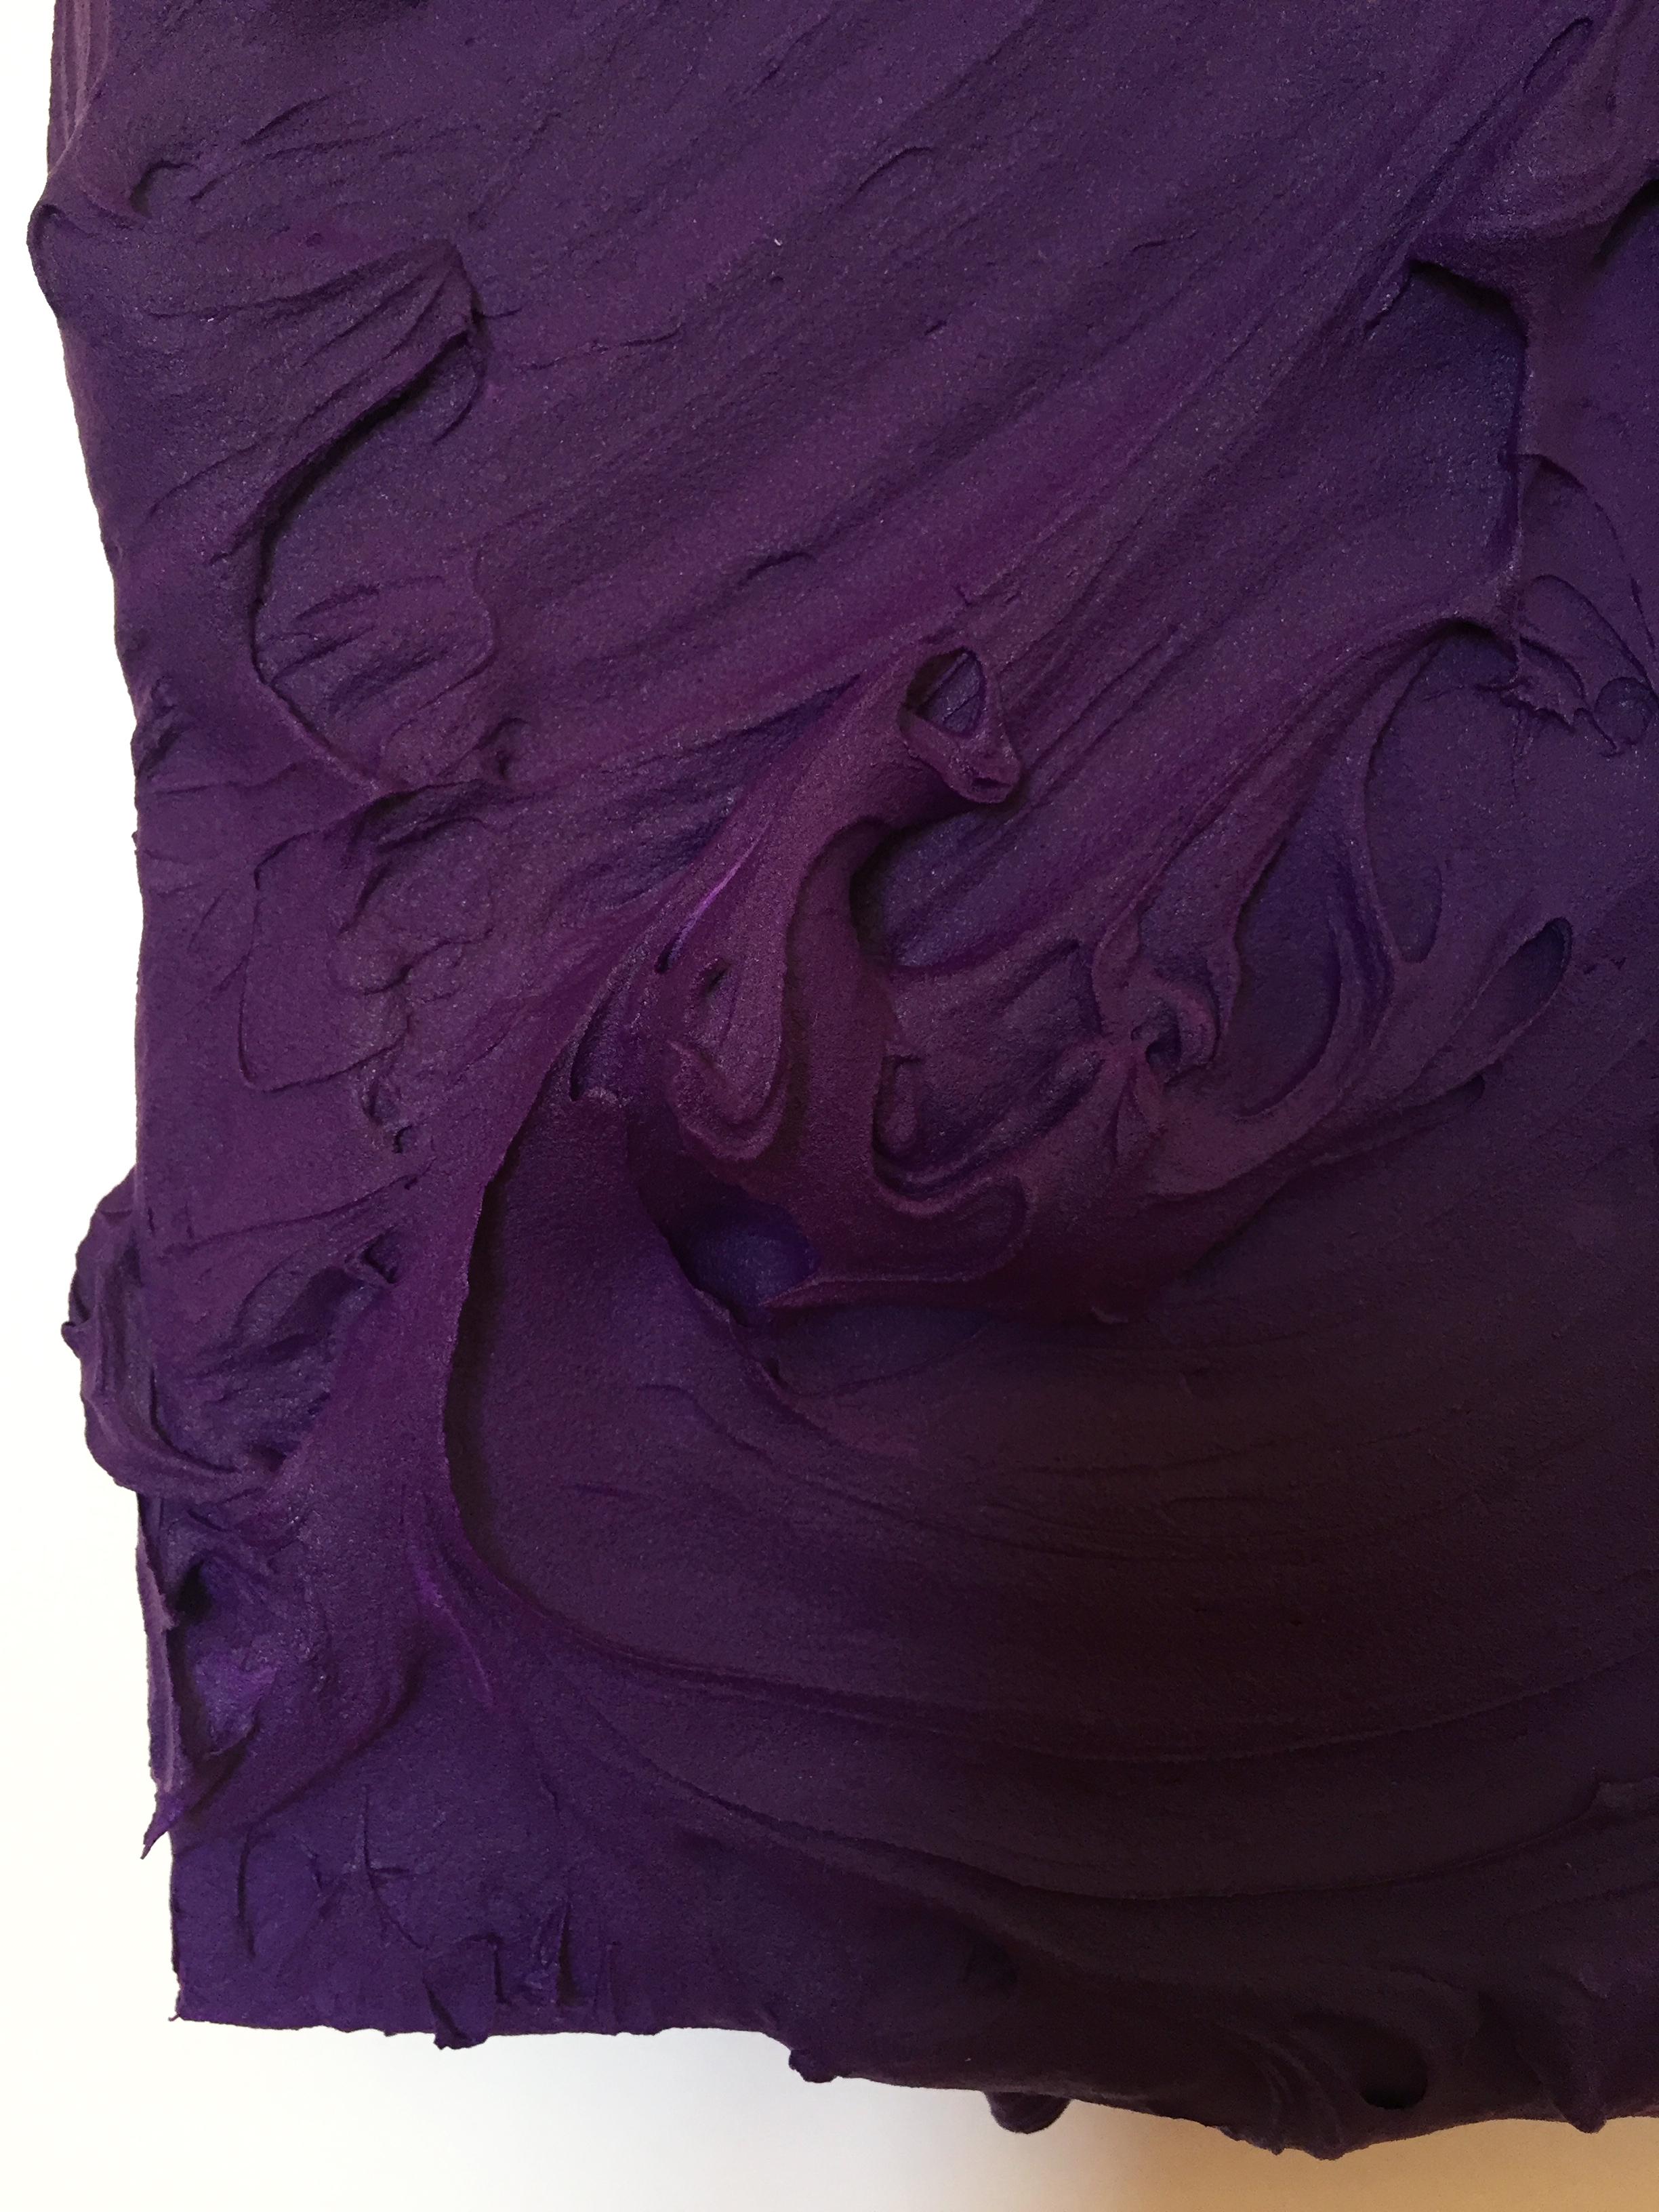 Grape Excess (violet impasto thick painting dark contemporary design vivid)  2